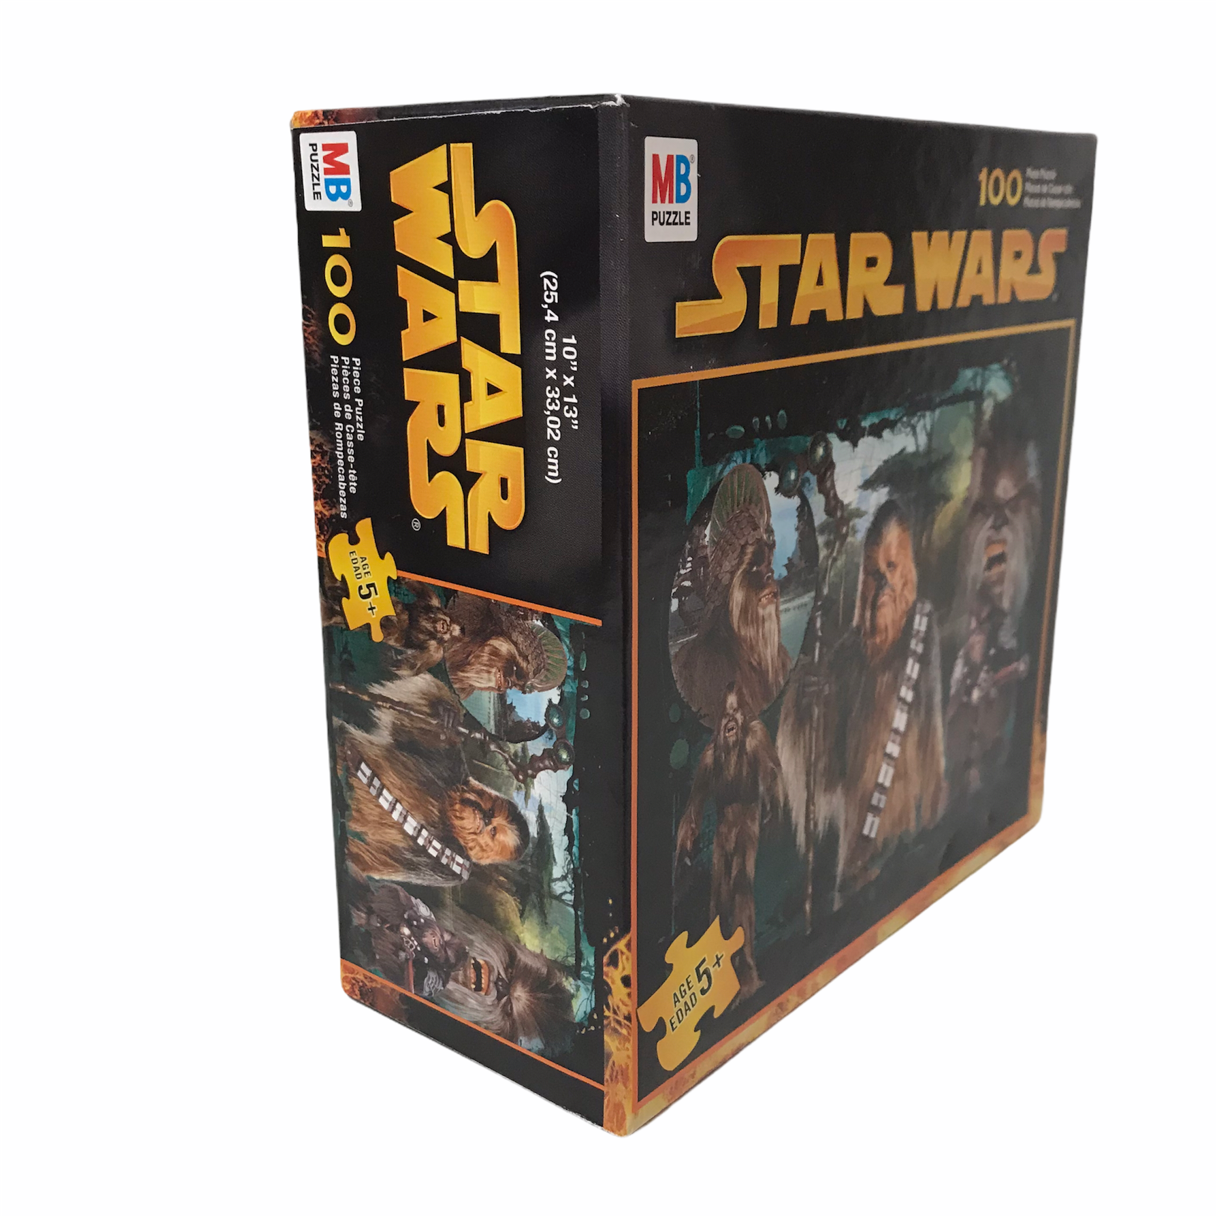 Star Wars Chewbacca 100 Piece MB Puzzle Box - Miraj Trading